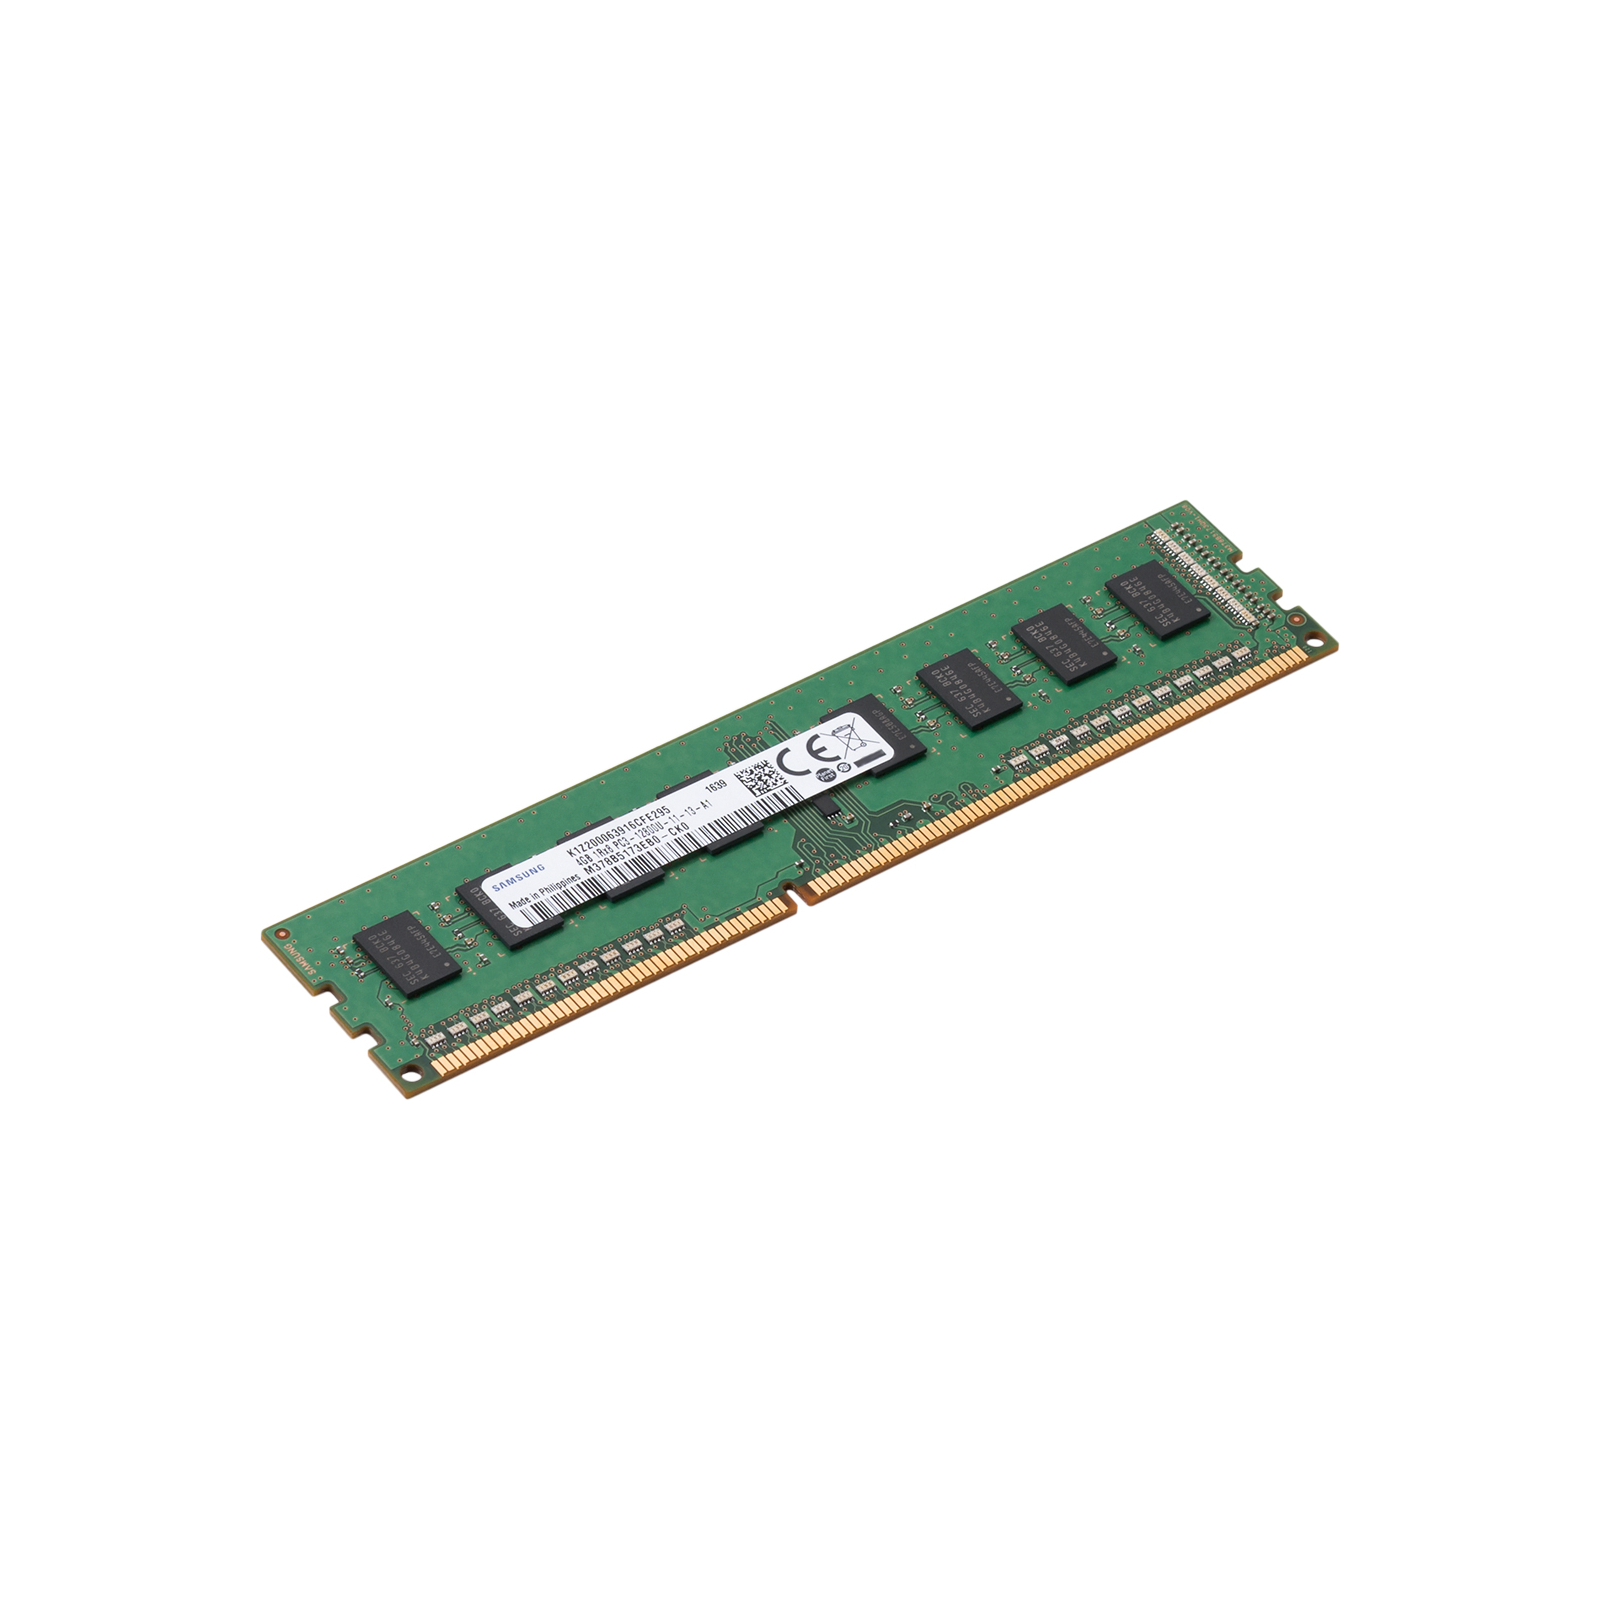 Модуль памяти для компьютера DDR3 4GB 1600 MHz Samsung (M378B5173EB0-CK0) изображение 2